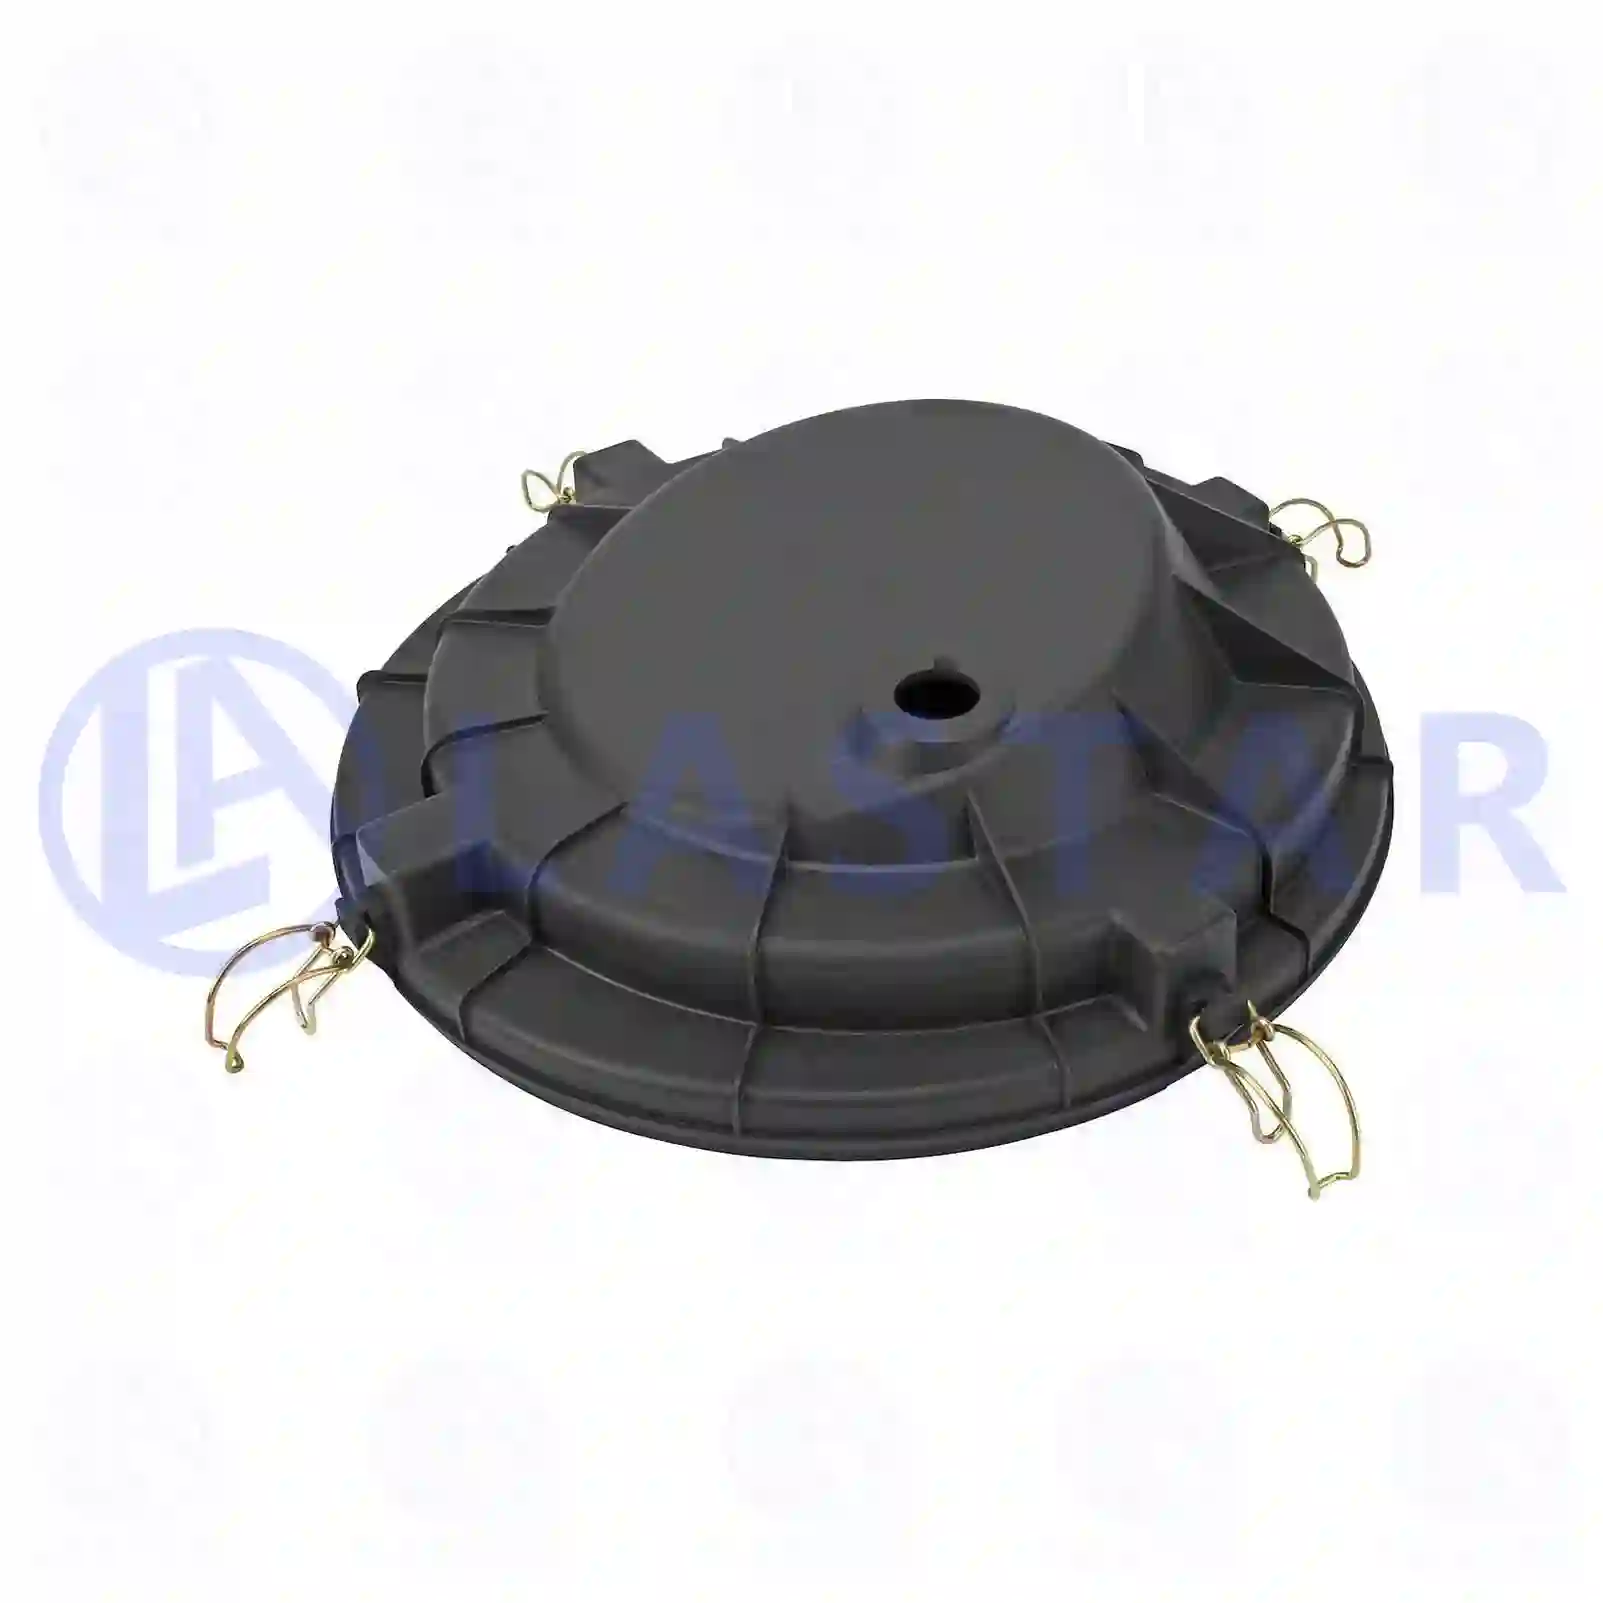  Air Filter Air filter cover, la no: 77707038 ,  oem no:1335677, ZG00909-0008 Lastar Spare Part | Truck Spare Parts, Auotomotive Spare Parts